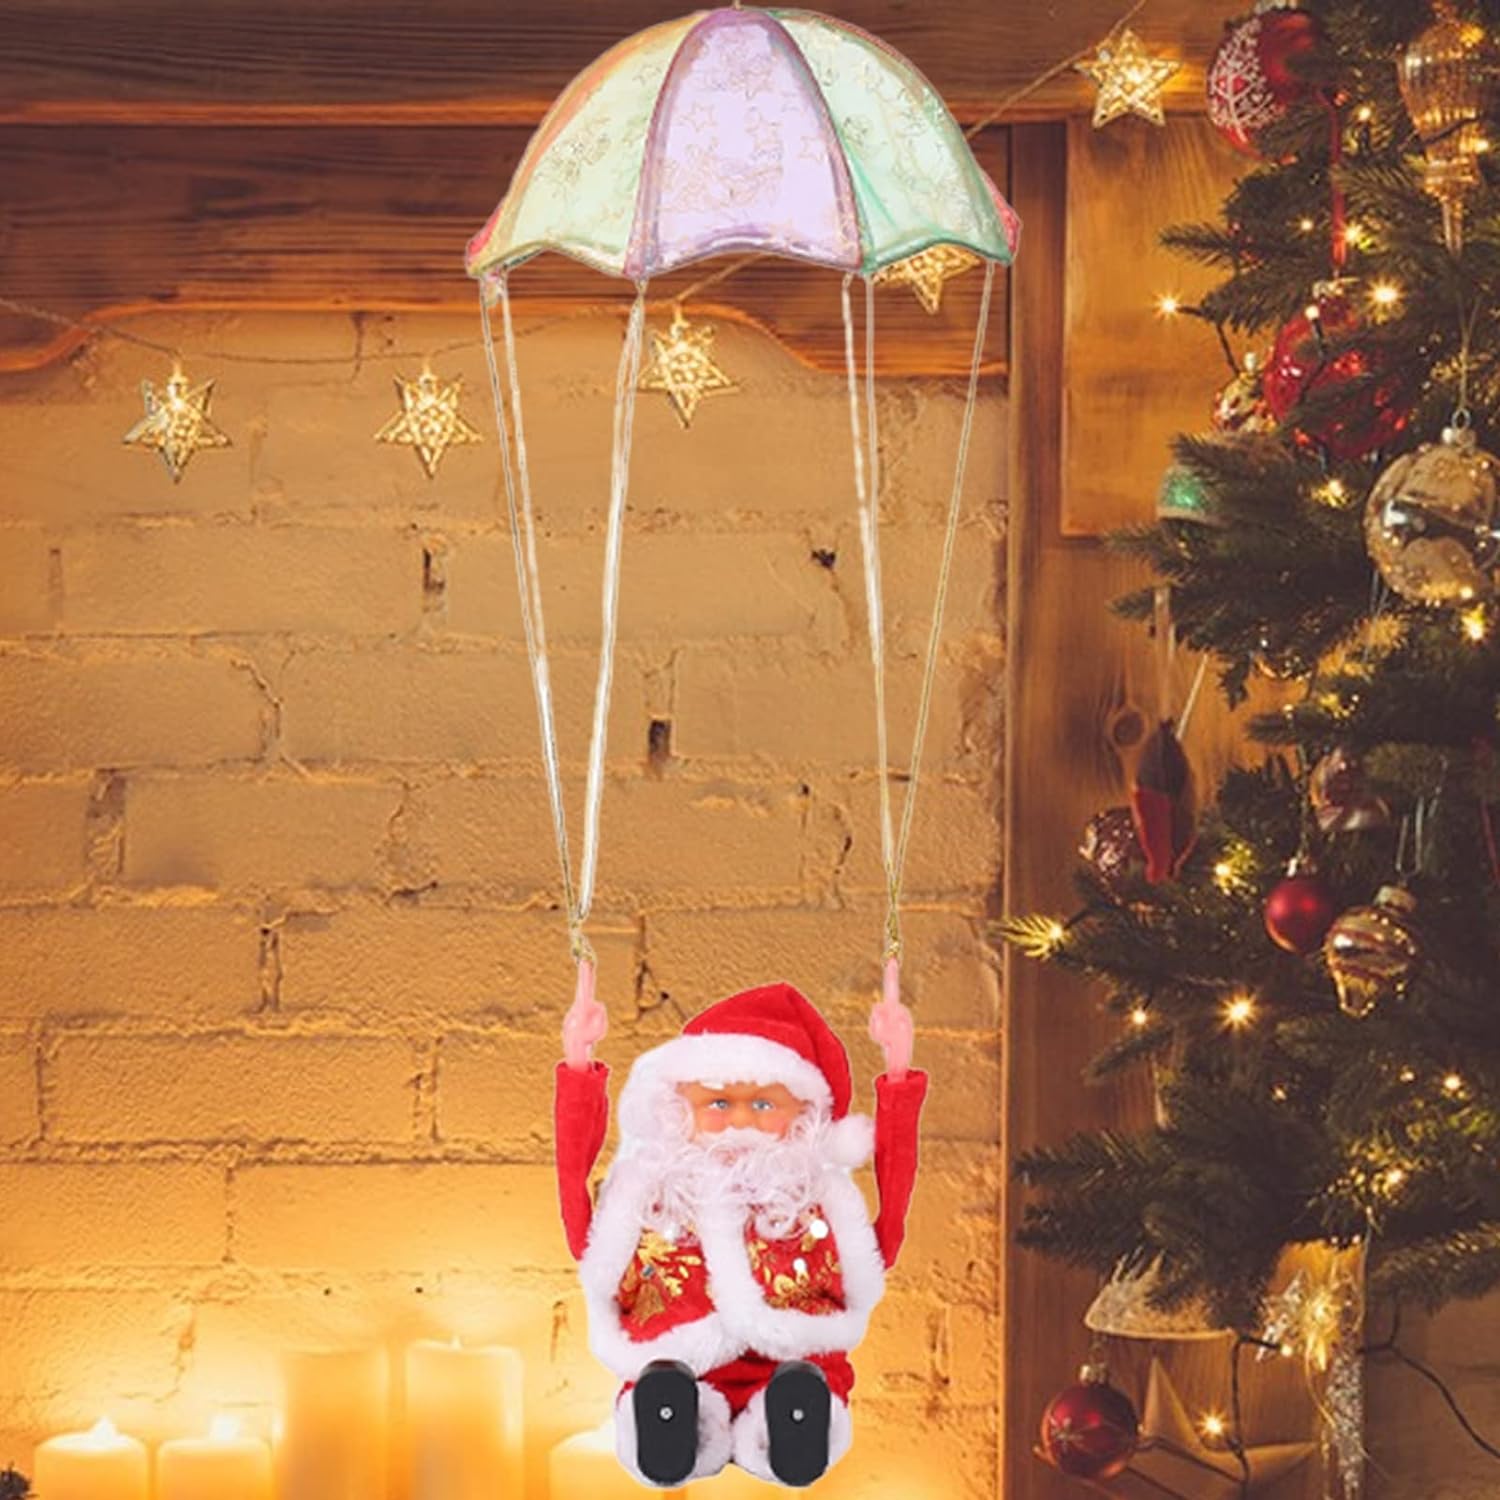 🔥 Parachute Musical Tumbling Père Noël